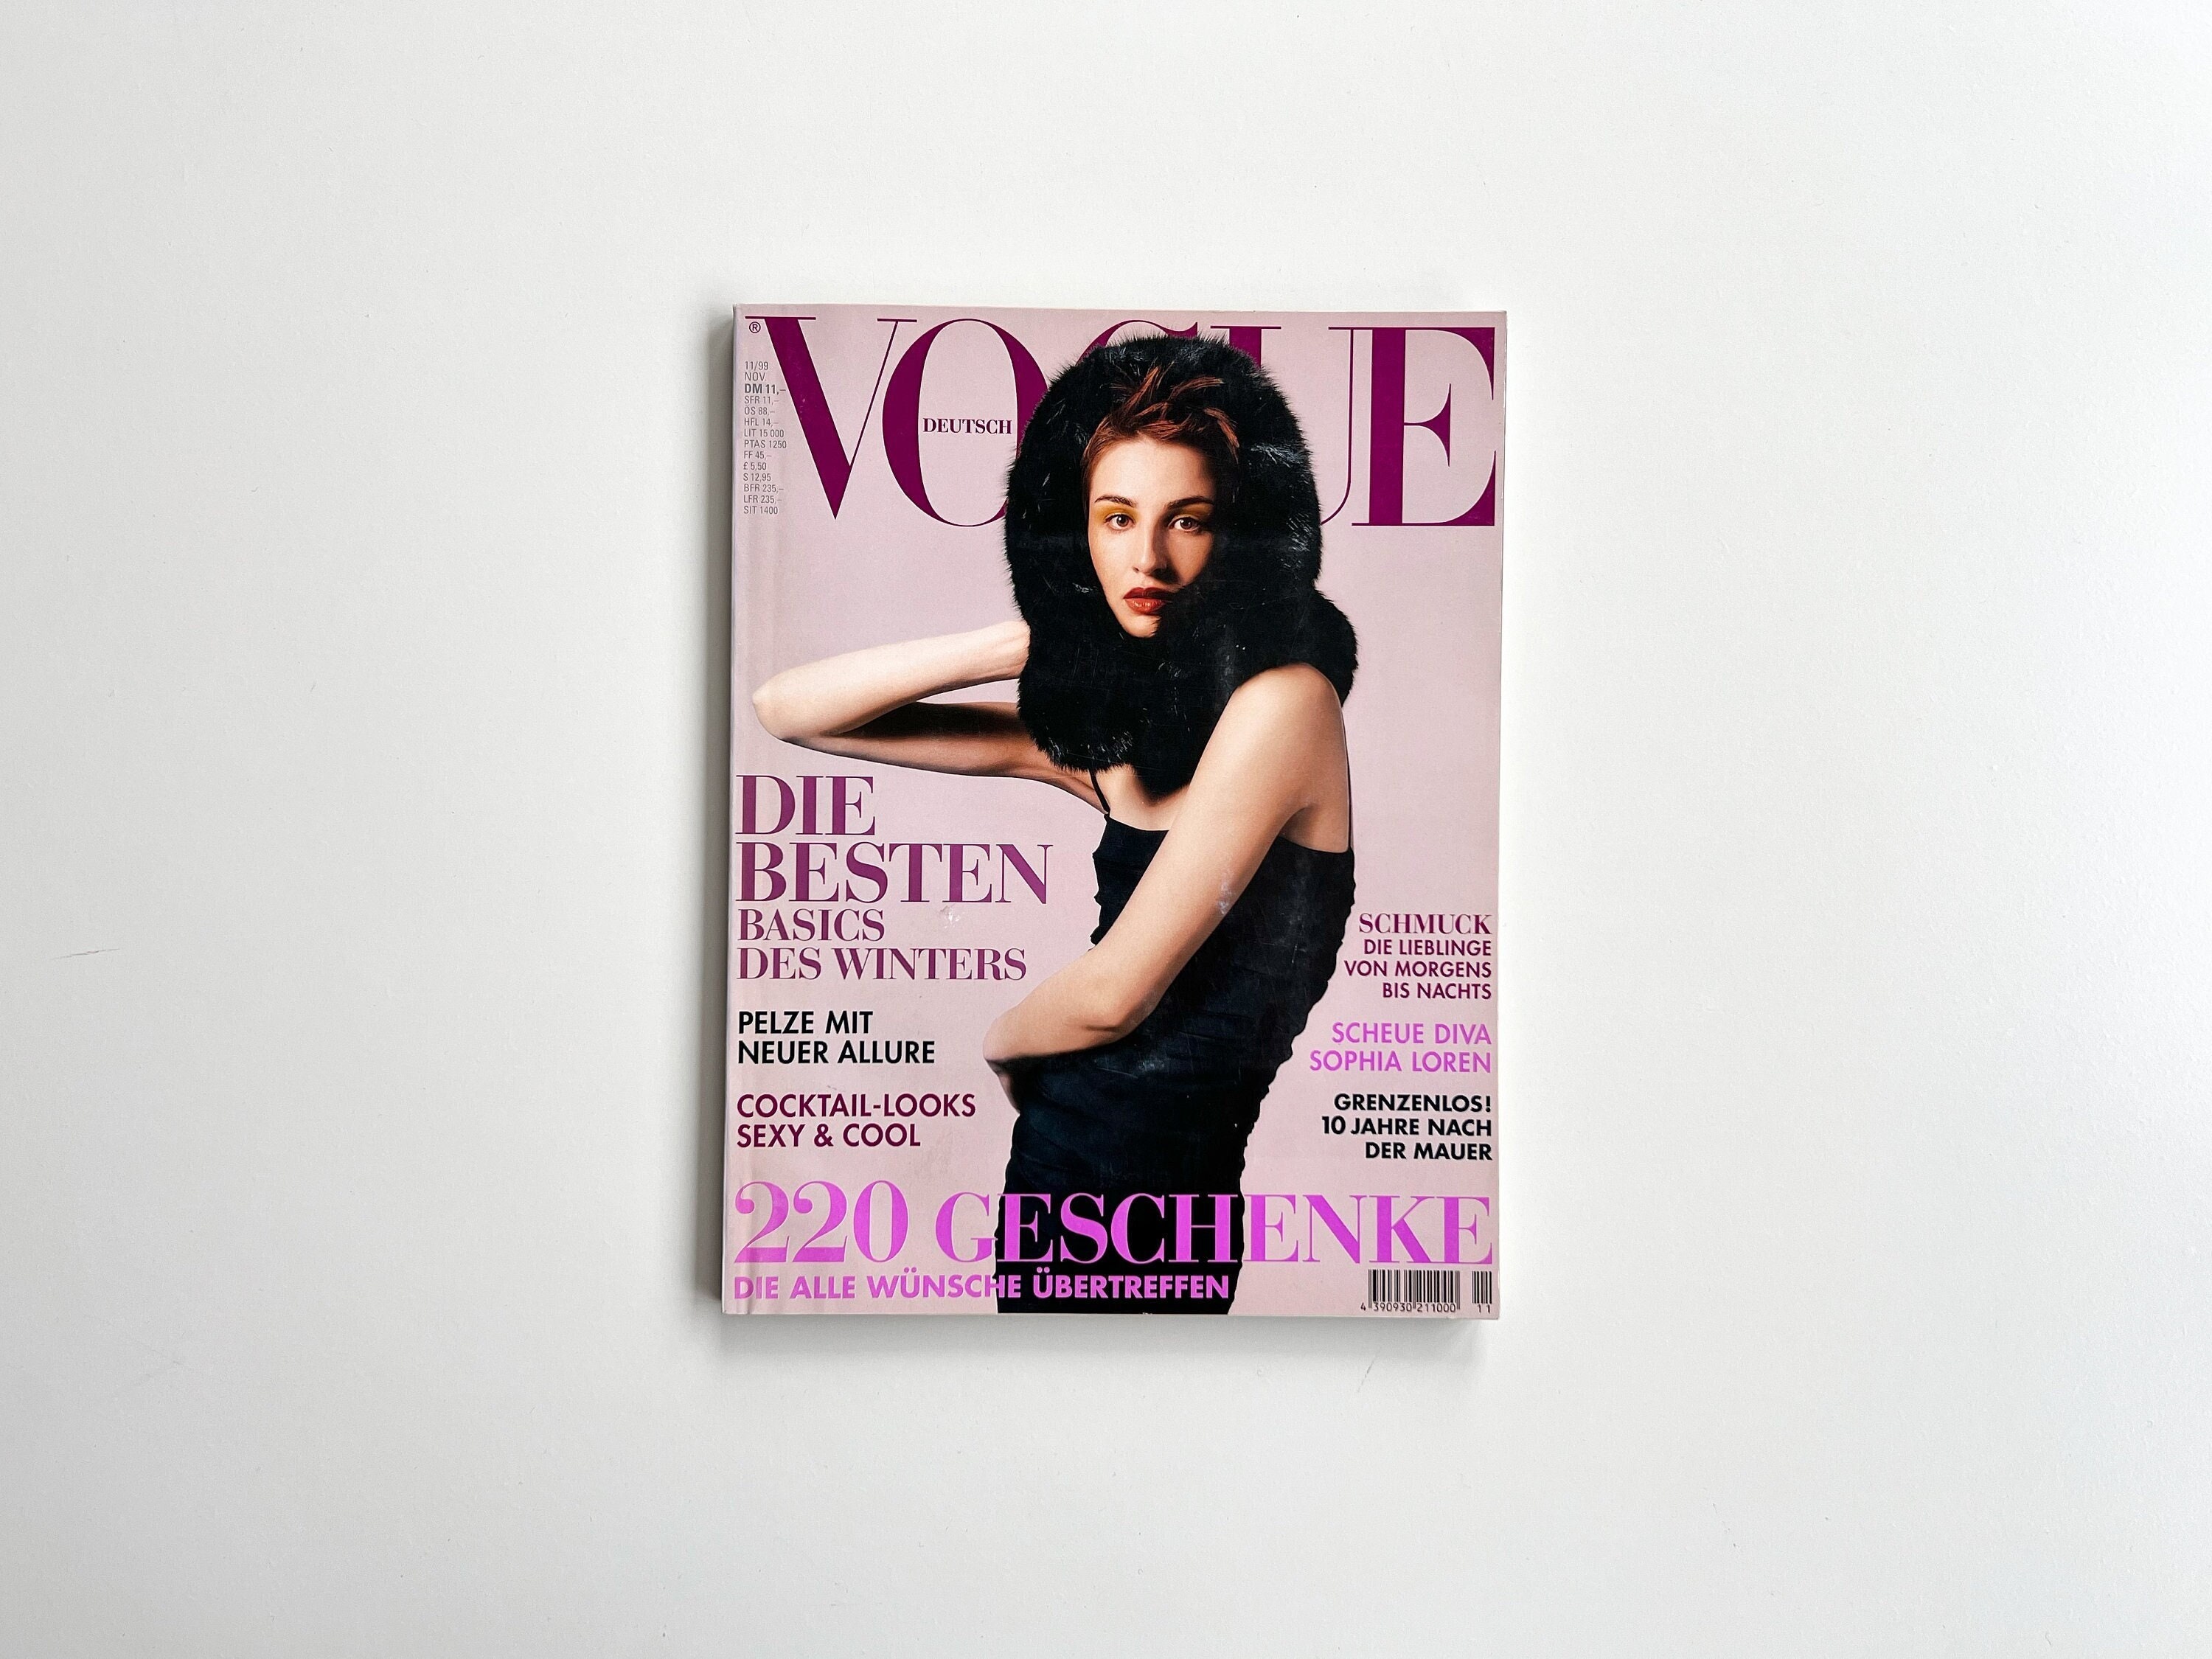 Perfectly Prissy Photoshoots : Carmen Kass Vogue Italia